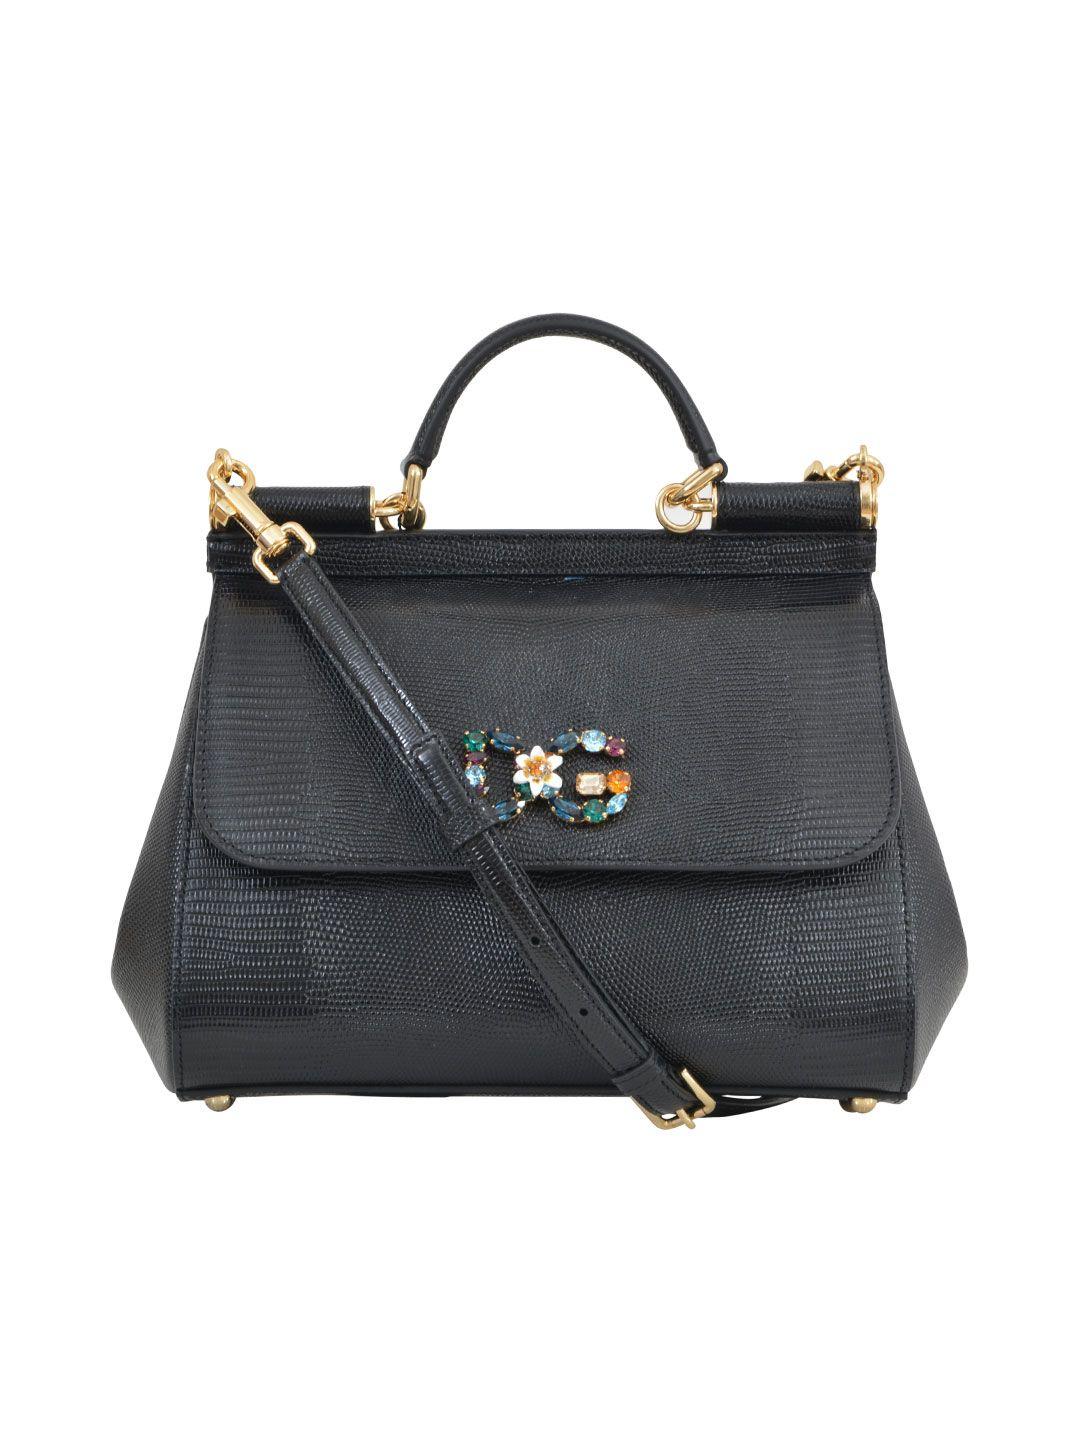 Dolce & Gabbana Embellished Medium Sicily Leather Bag In Multi | ModeSens